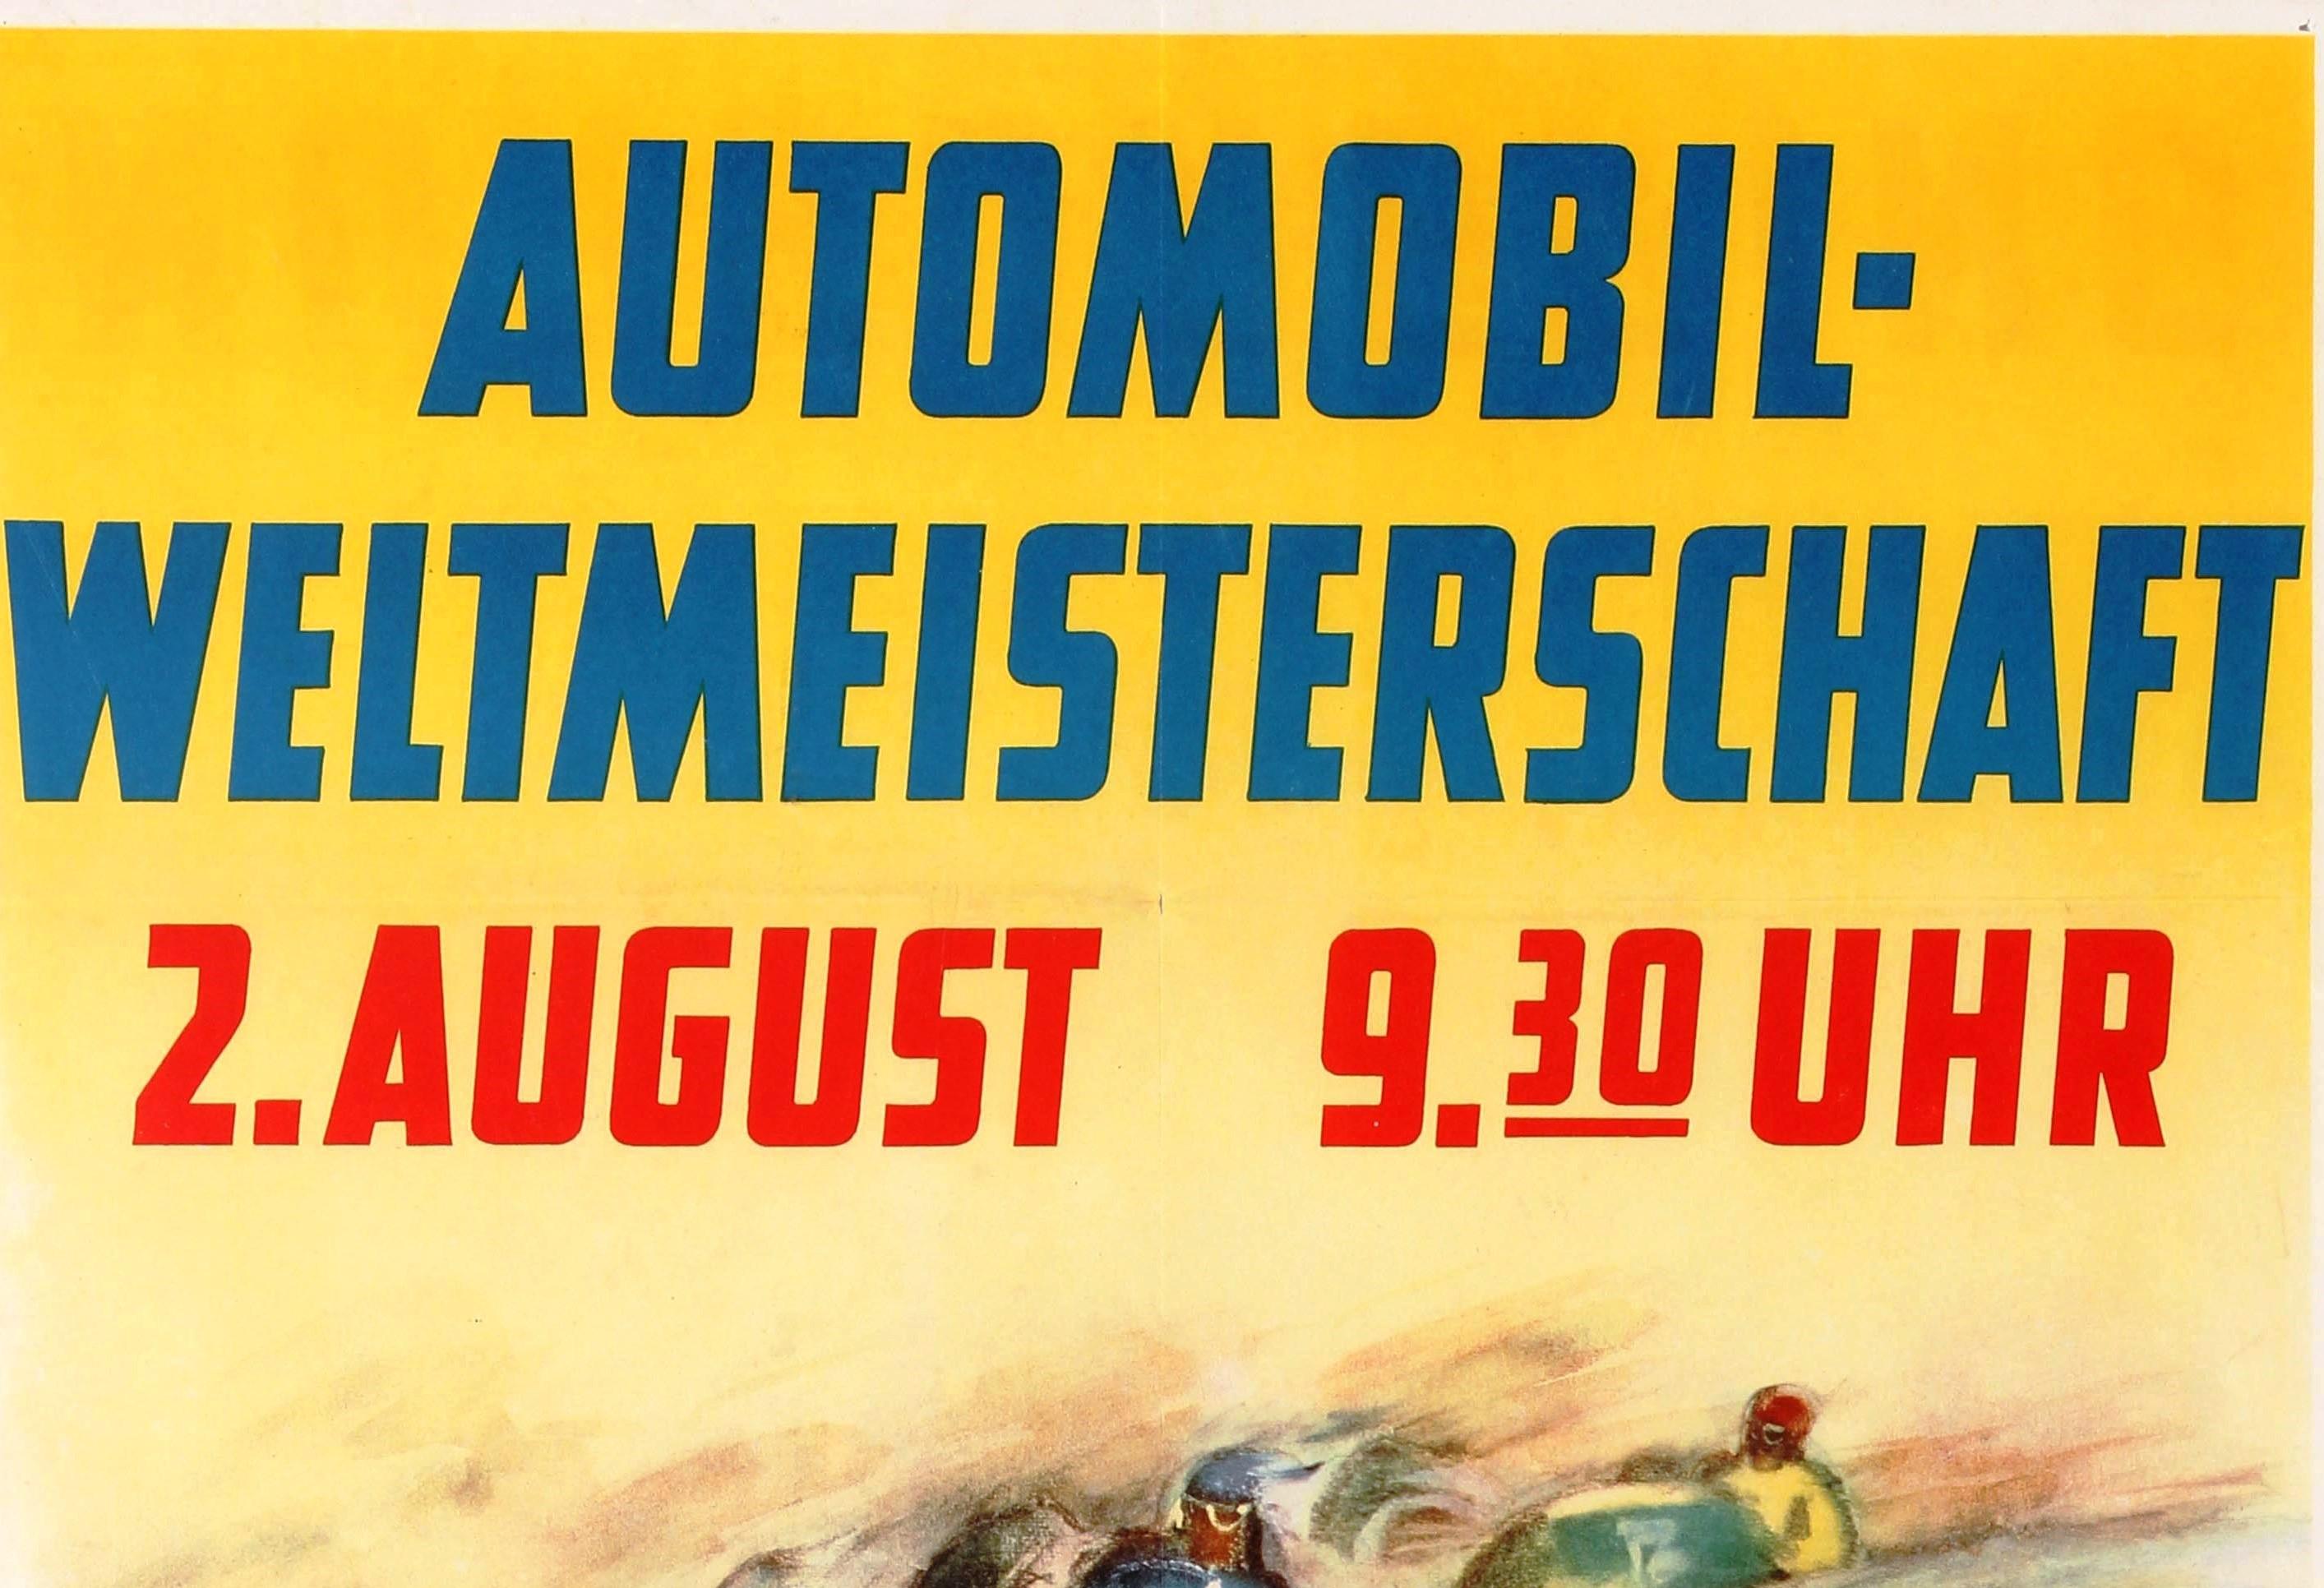 Original vintage F1 motor sport poster advertising the Automobil-Weltmeisterschaft XVI. Grosser Preis Von Deutschland Nürburgring / Automobile World Cup XVI Grand Prix of Germany held at the Nurburgring race track on 2 August 1953. Dynamic design